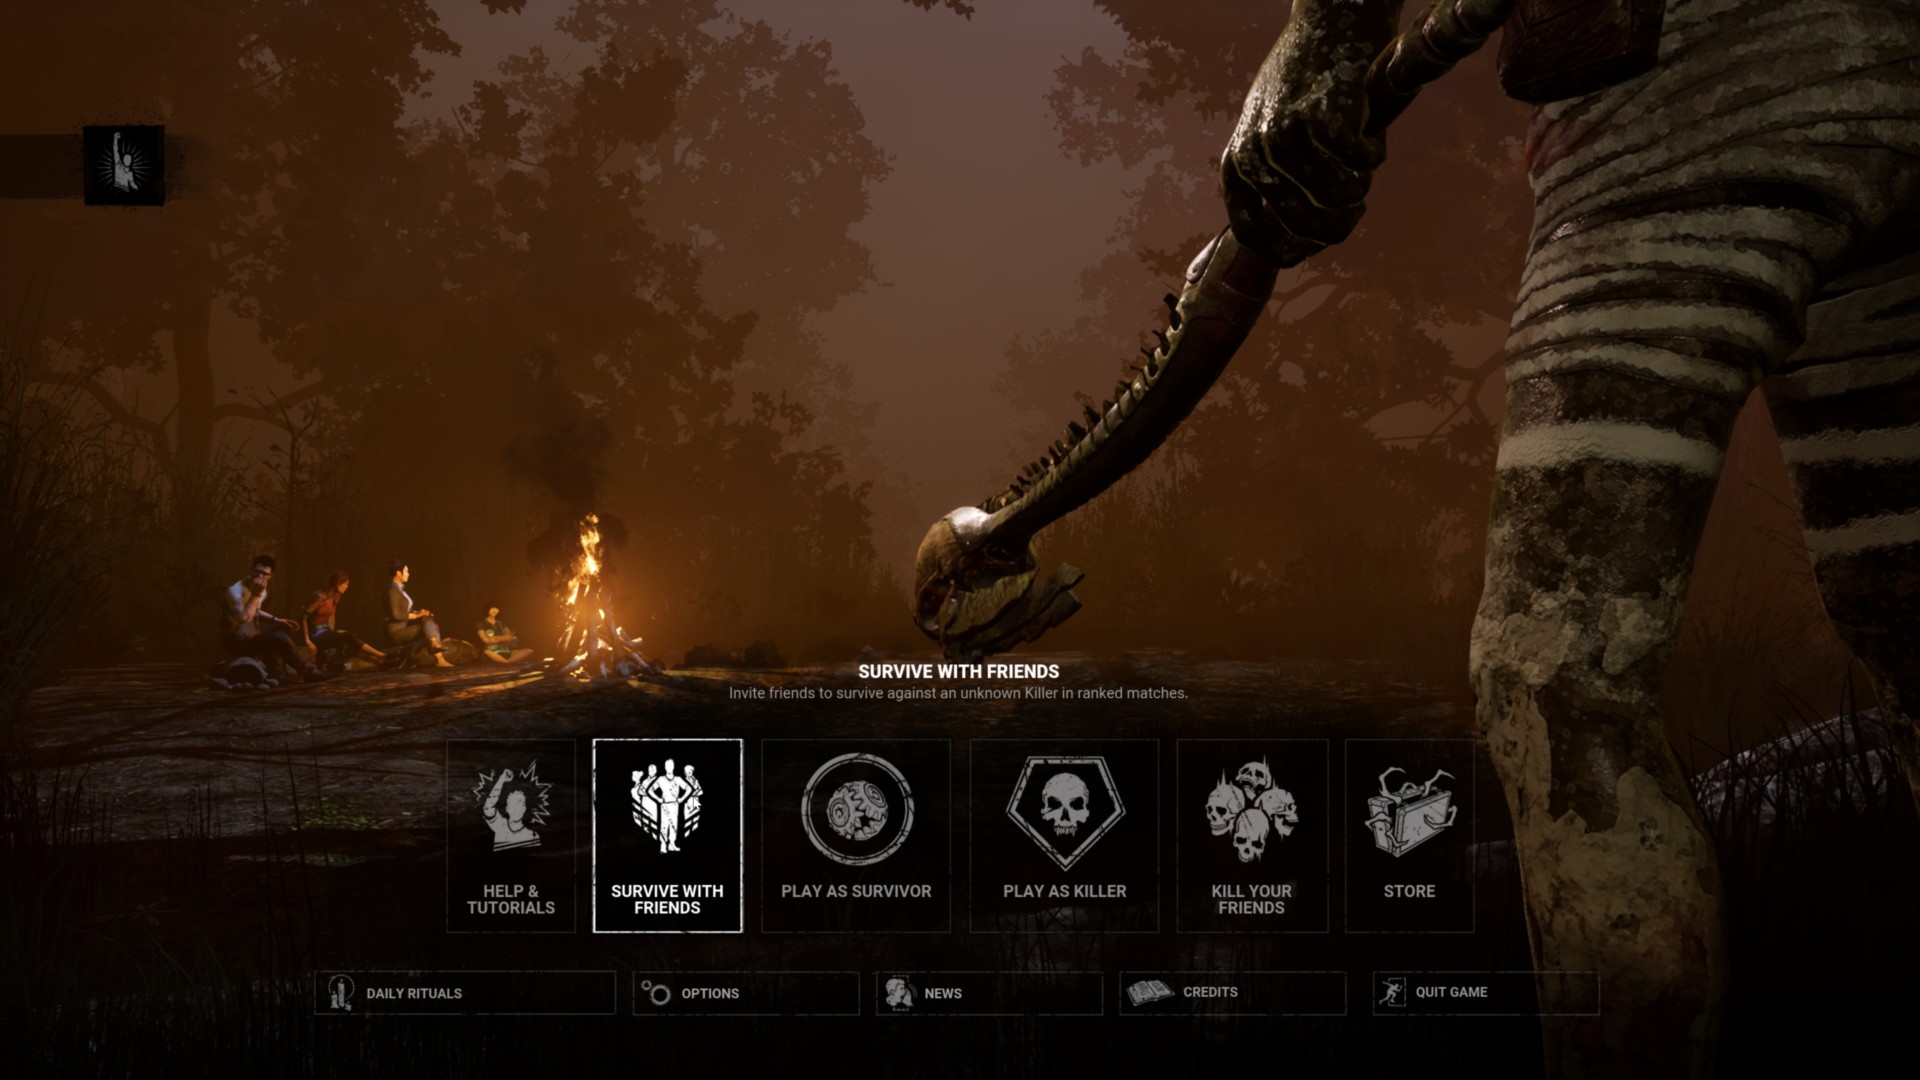 Main menu screenshot of Dead by Daylight video game interface.